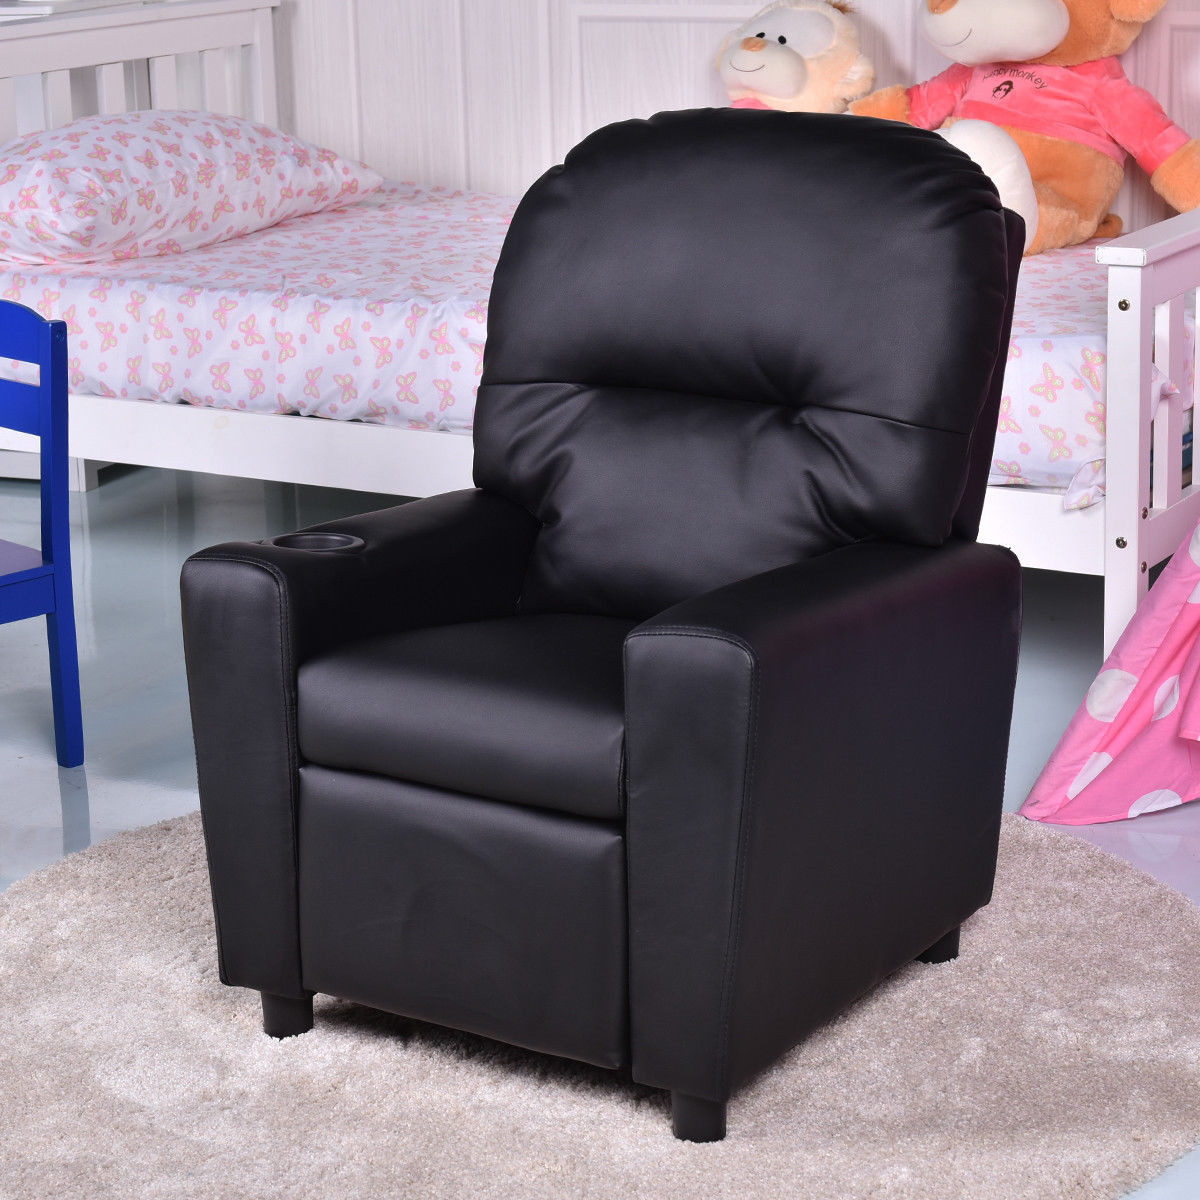 Kids Sofa And Chair
 Gymax Kids Armchair Recliner Children s Furniture Sofa